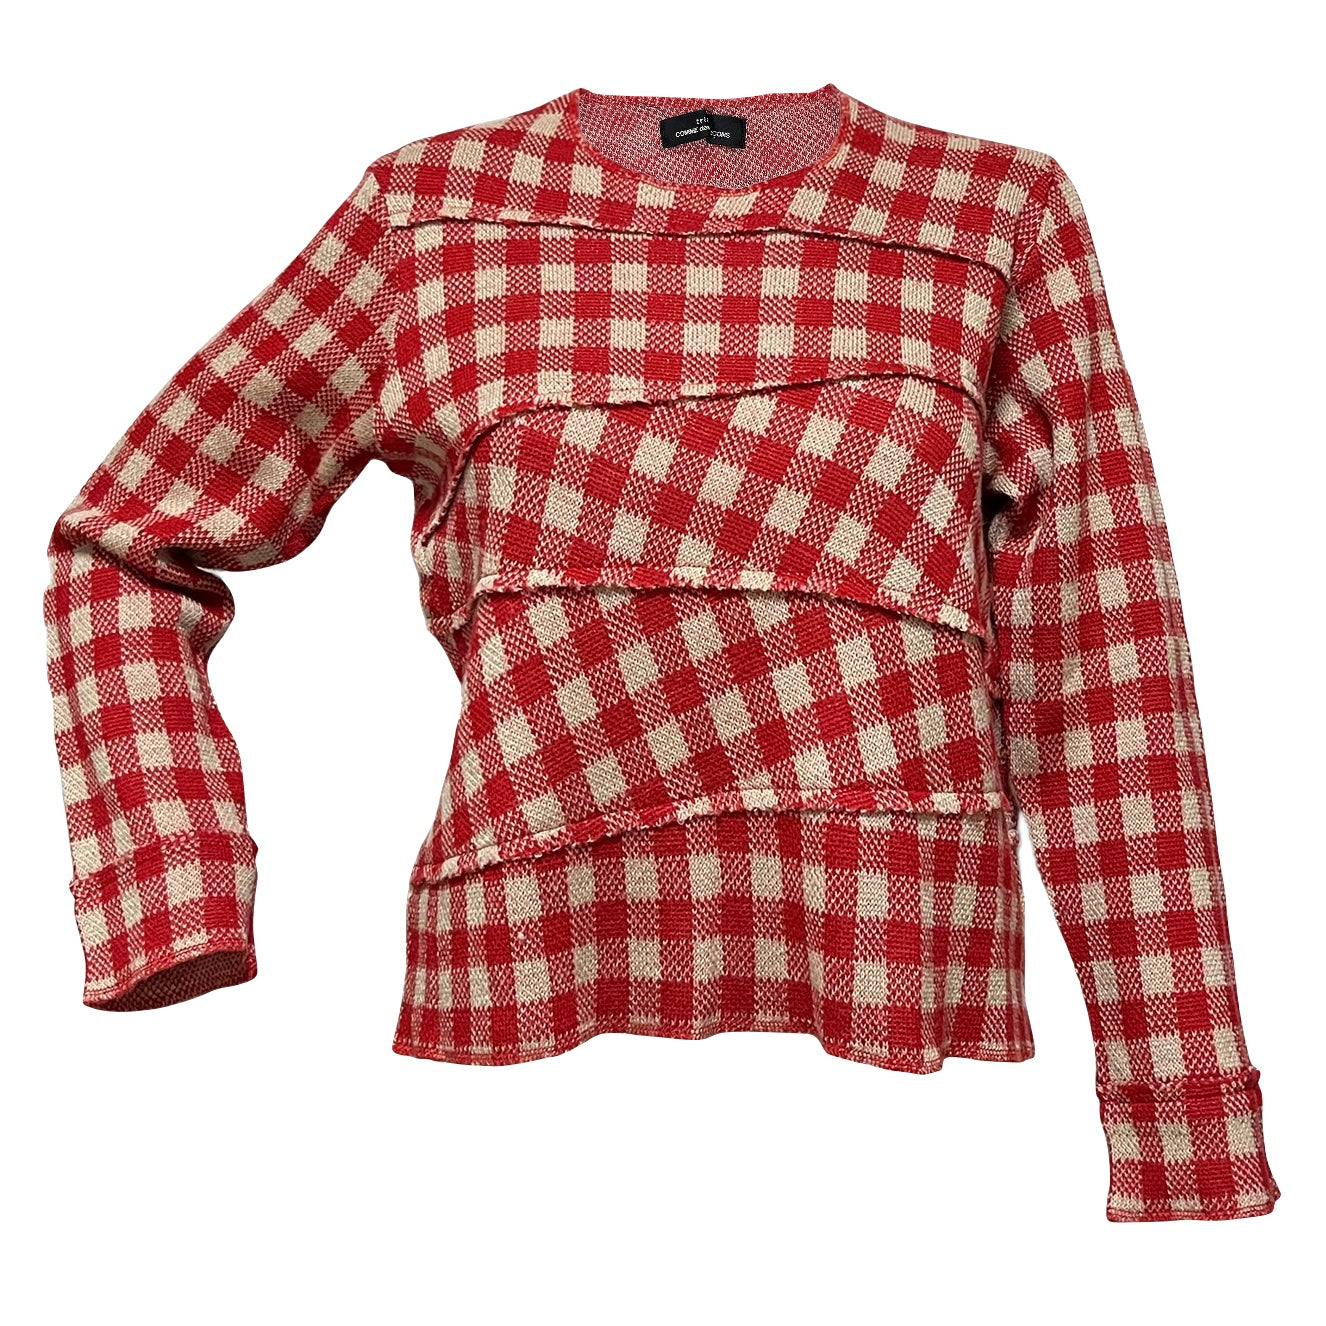 TRICOT COMME DES GARÇONS Checkered Knit Sweater